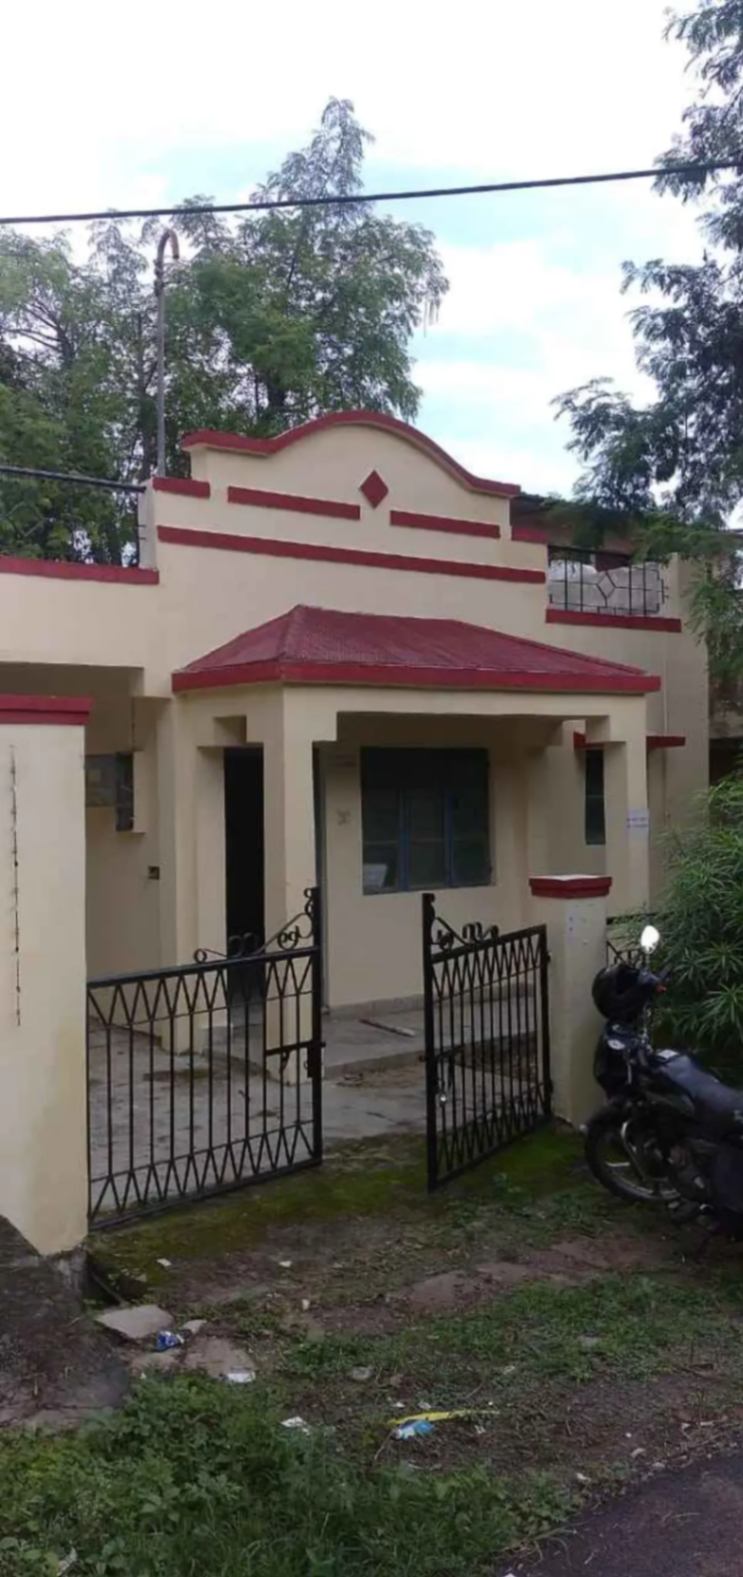 2 Bed/ 2 Bath Sell House/ Bungalow/ Villa; 1,000 sq. ft. carpet area; 1,533 sq. ft. lot for sale @Housing board katara hills bhopal 